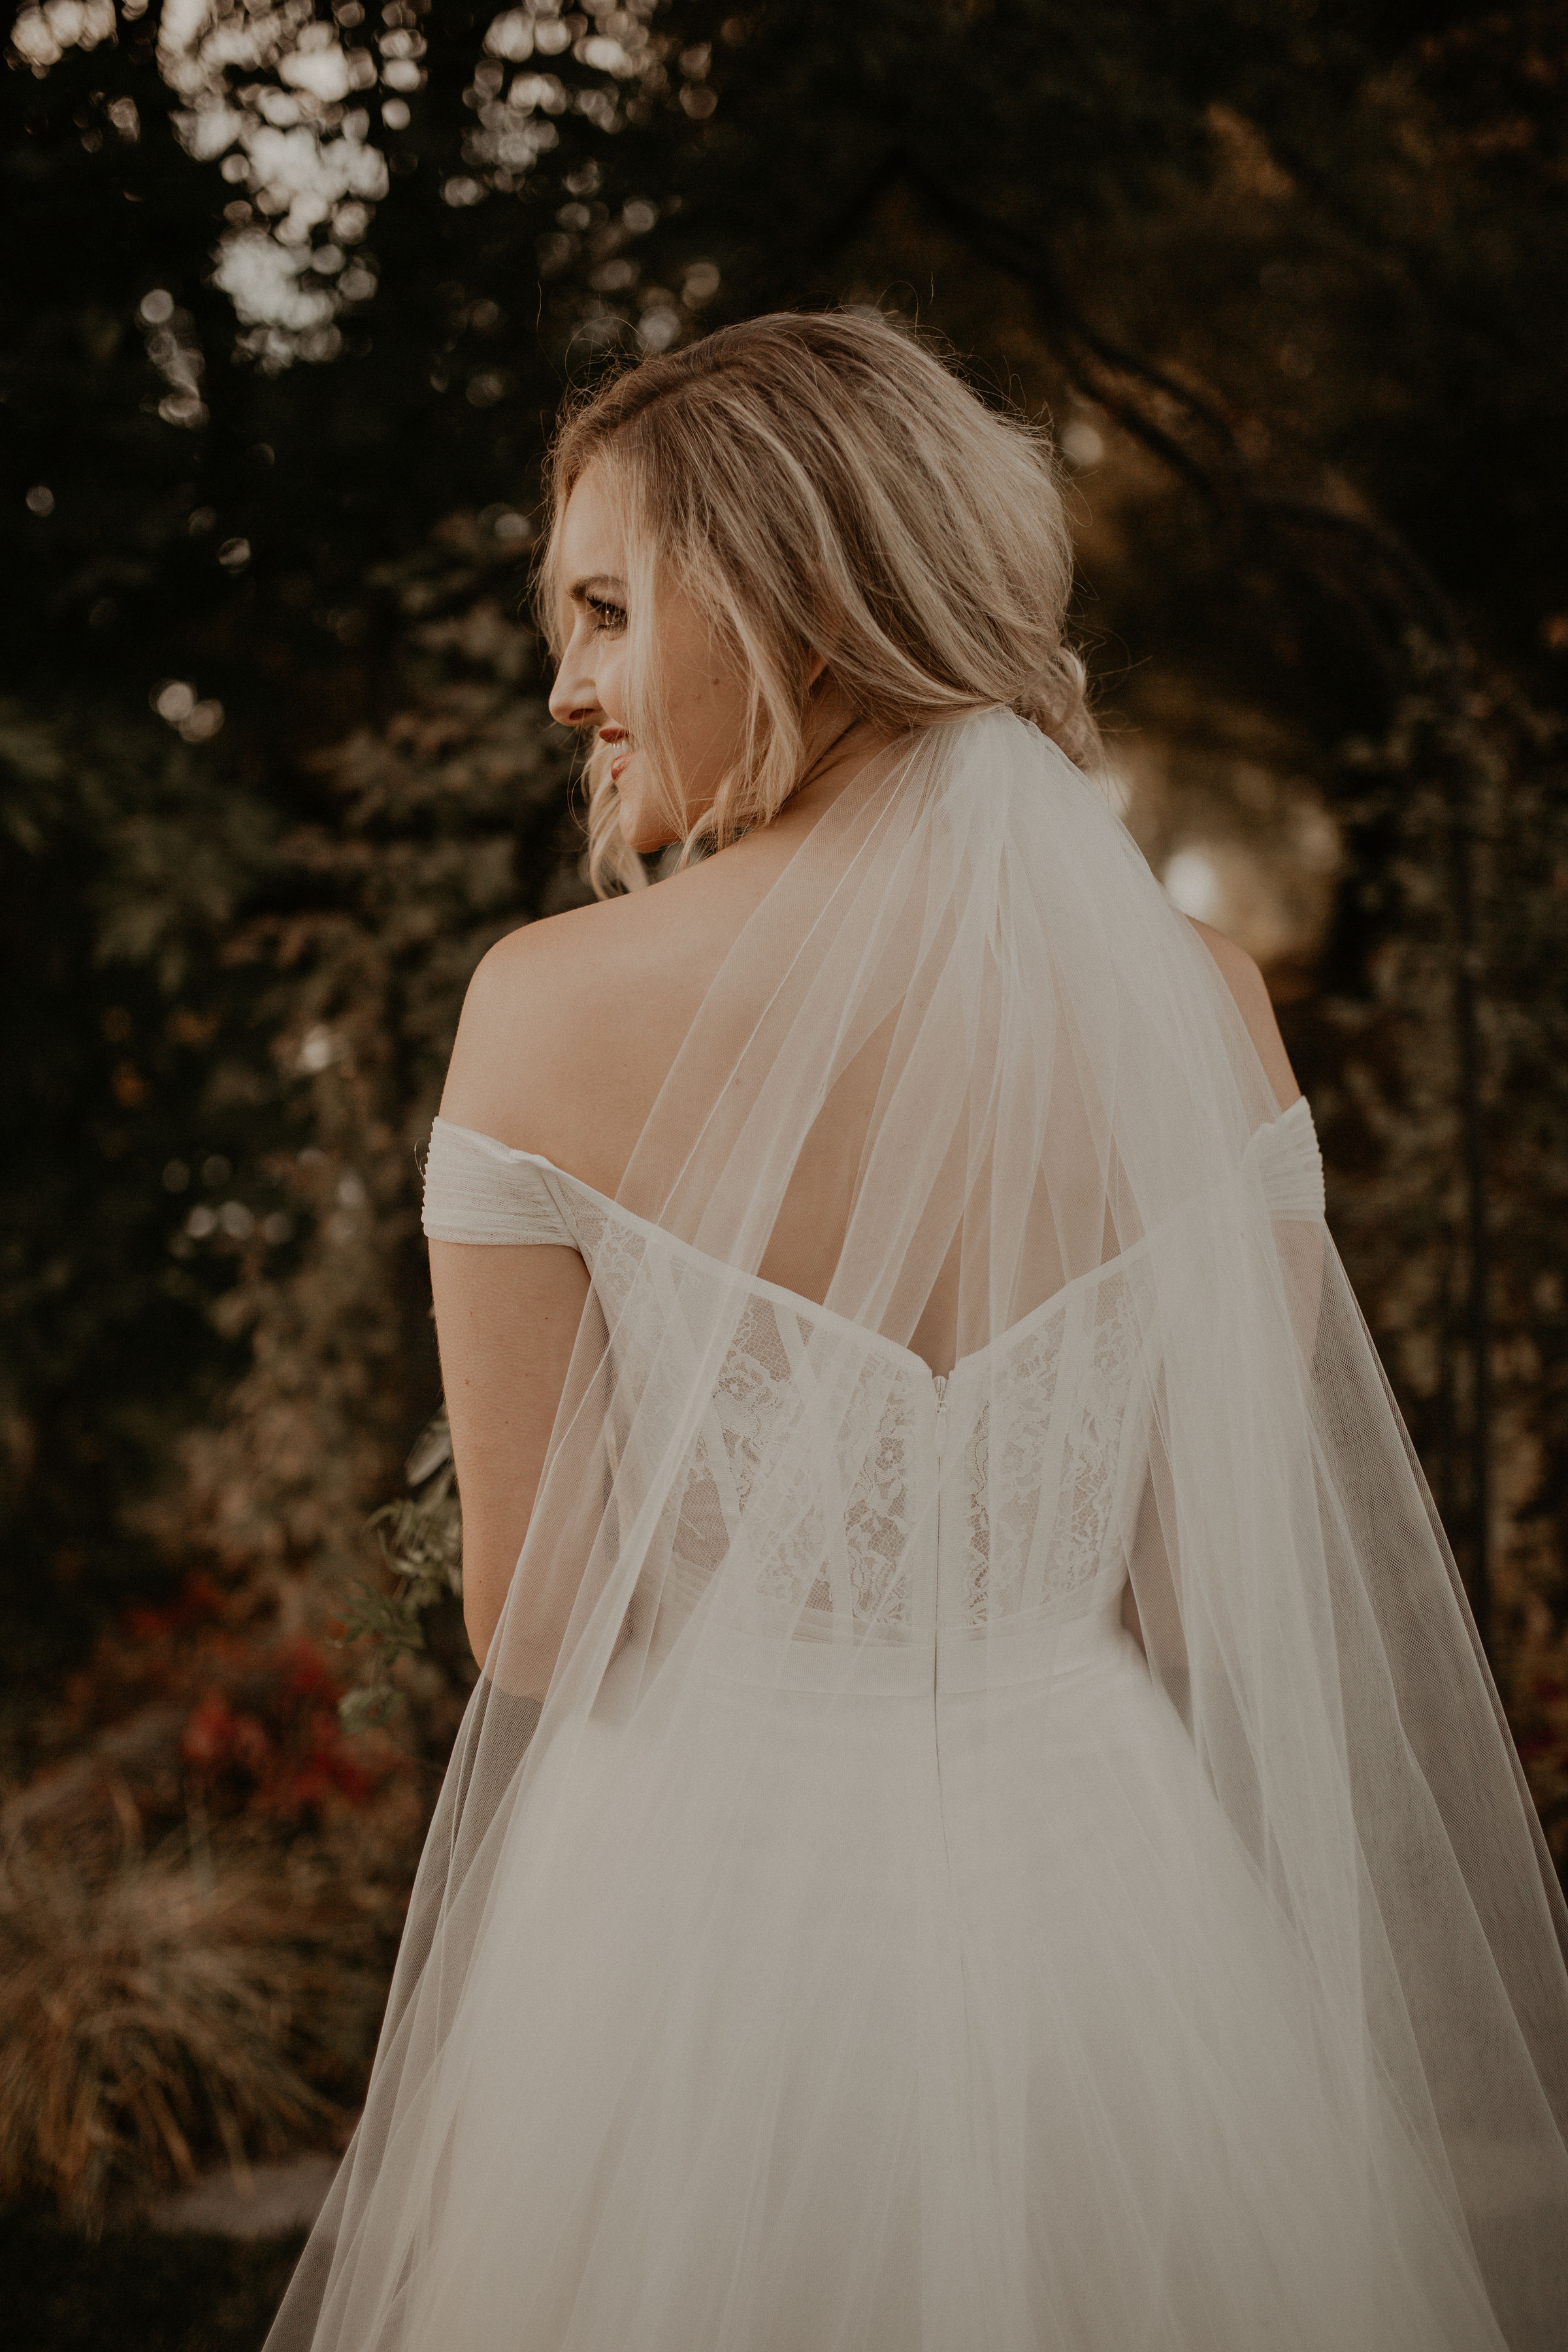 blonde bride wedding spokane veil lace